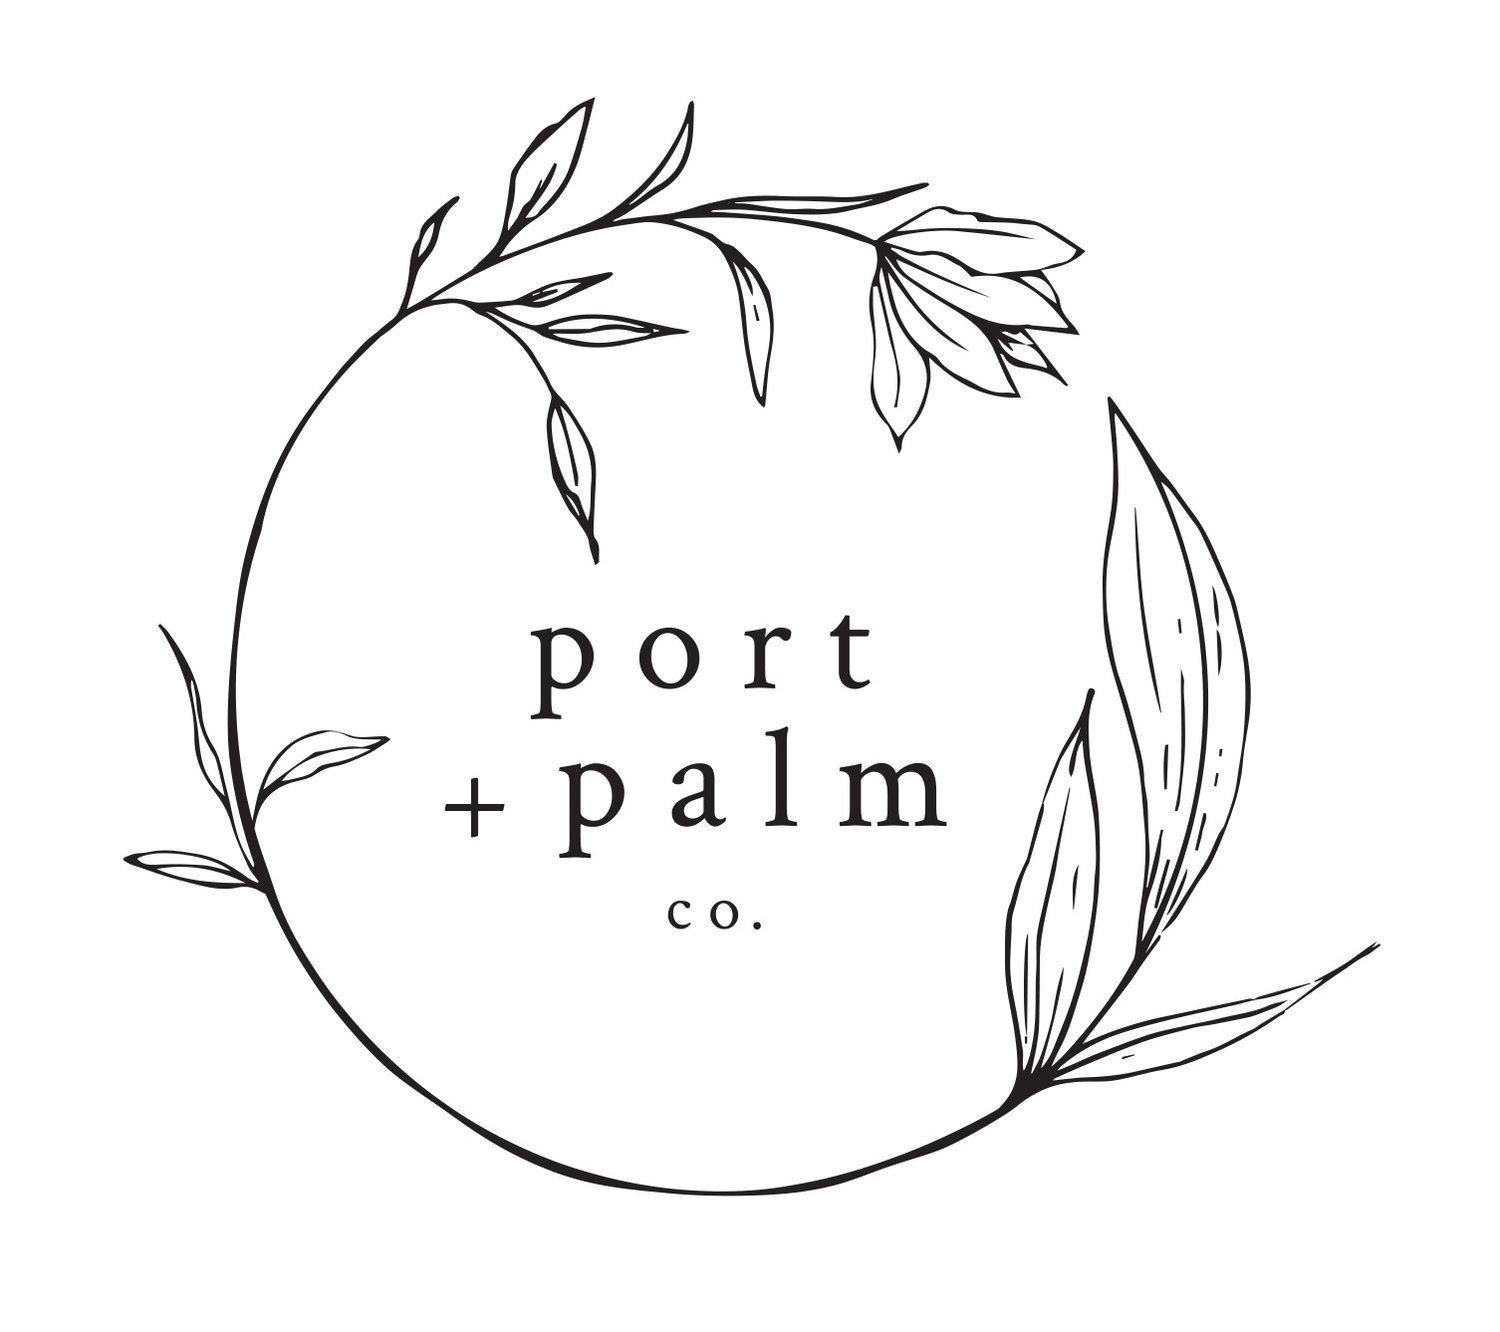 Palmco Logo - Port + Palm Co